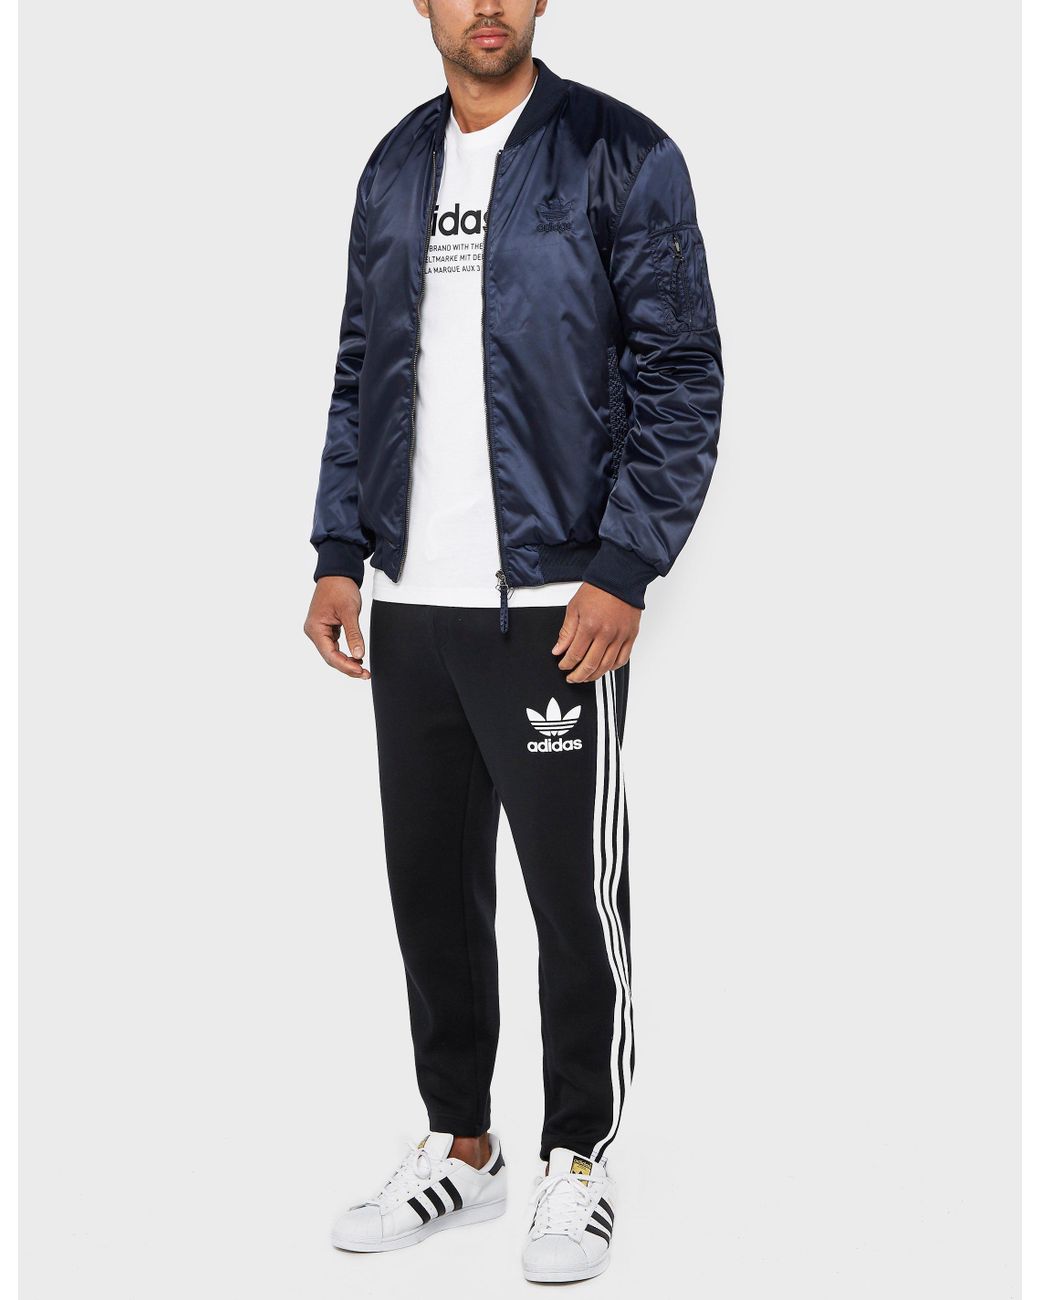 adidas Originals Ma1 Superstar Bomber Jacket in Blue for Men | Lyst Canada